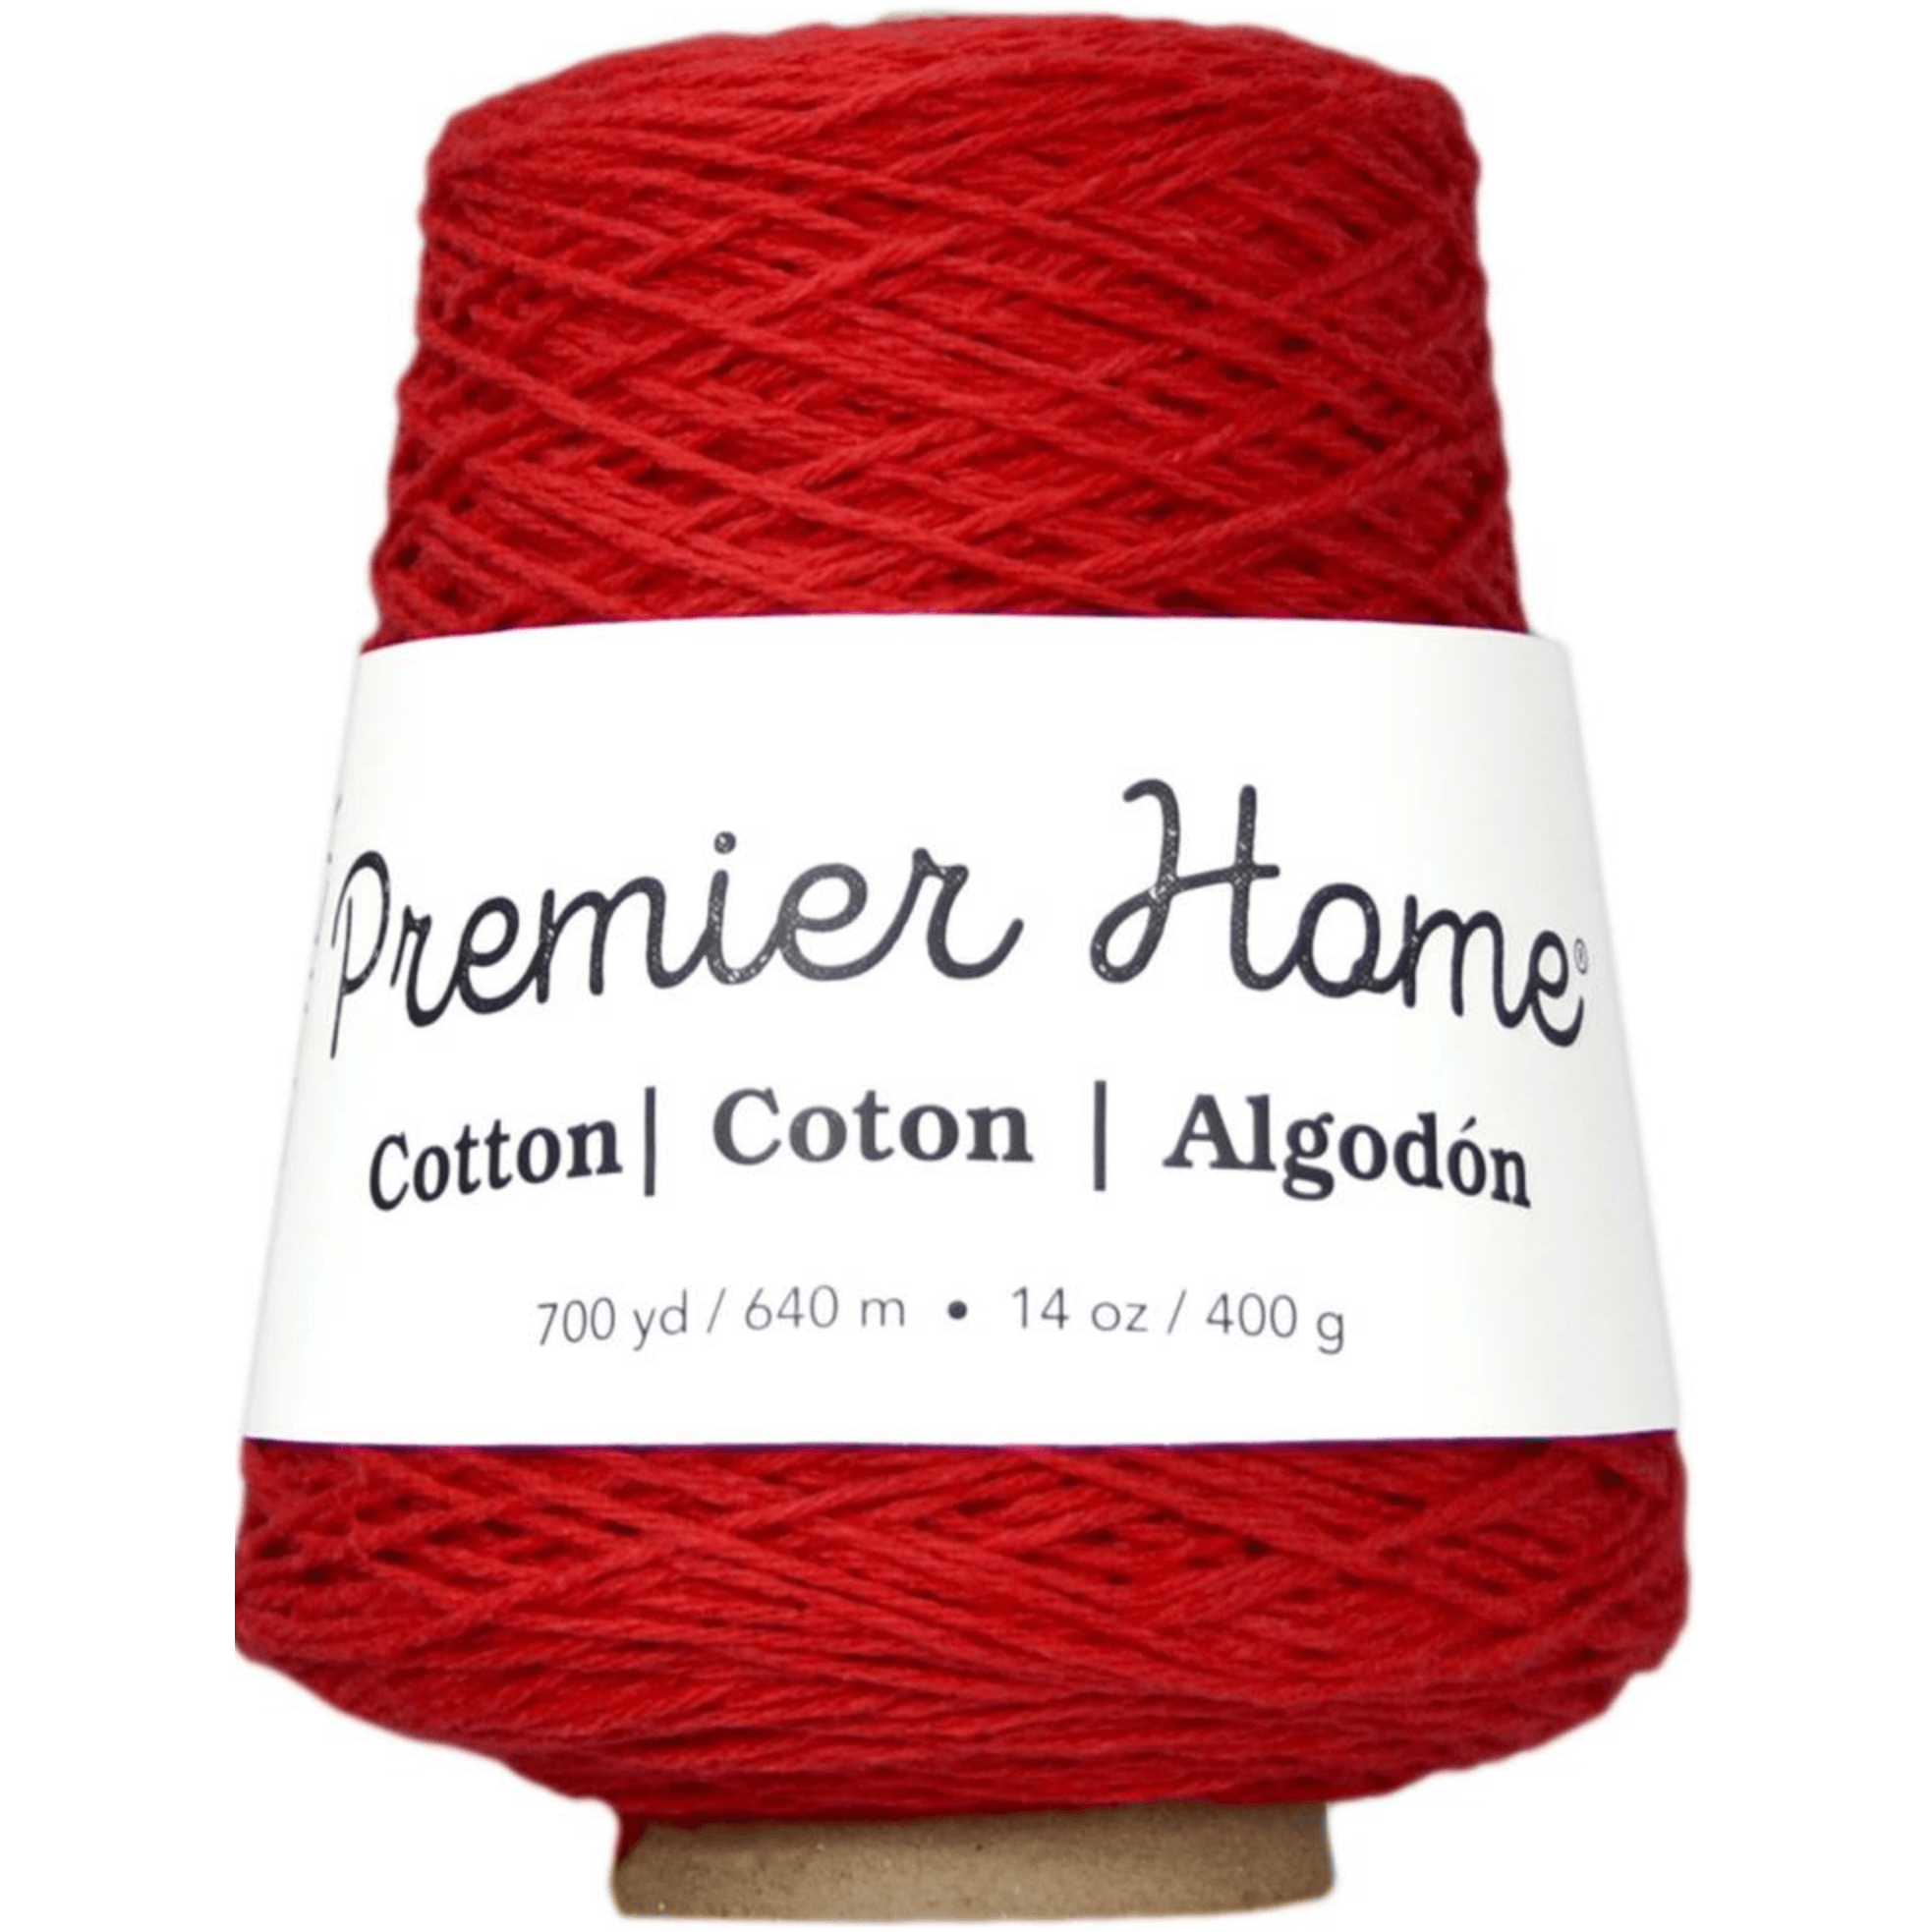 Cotton & Cotton Blend Yarn - Premier® Yarns Home™ Cotton